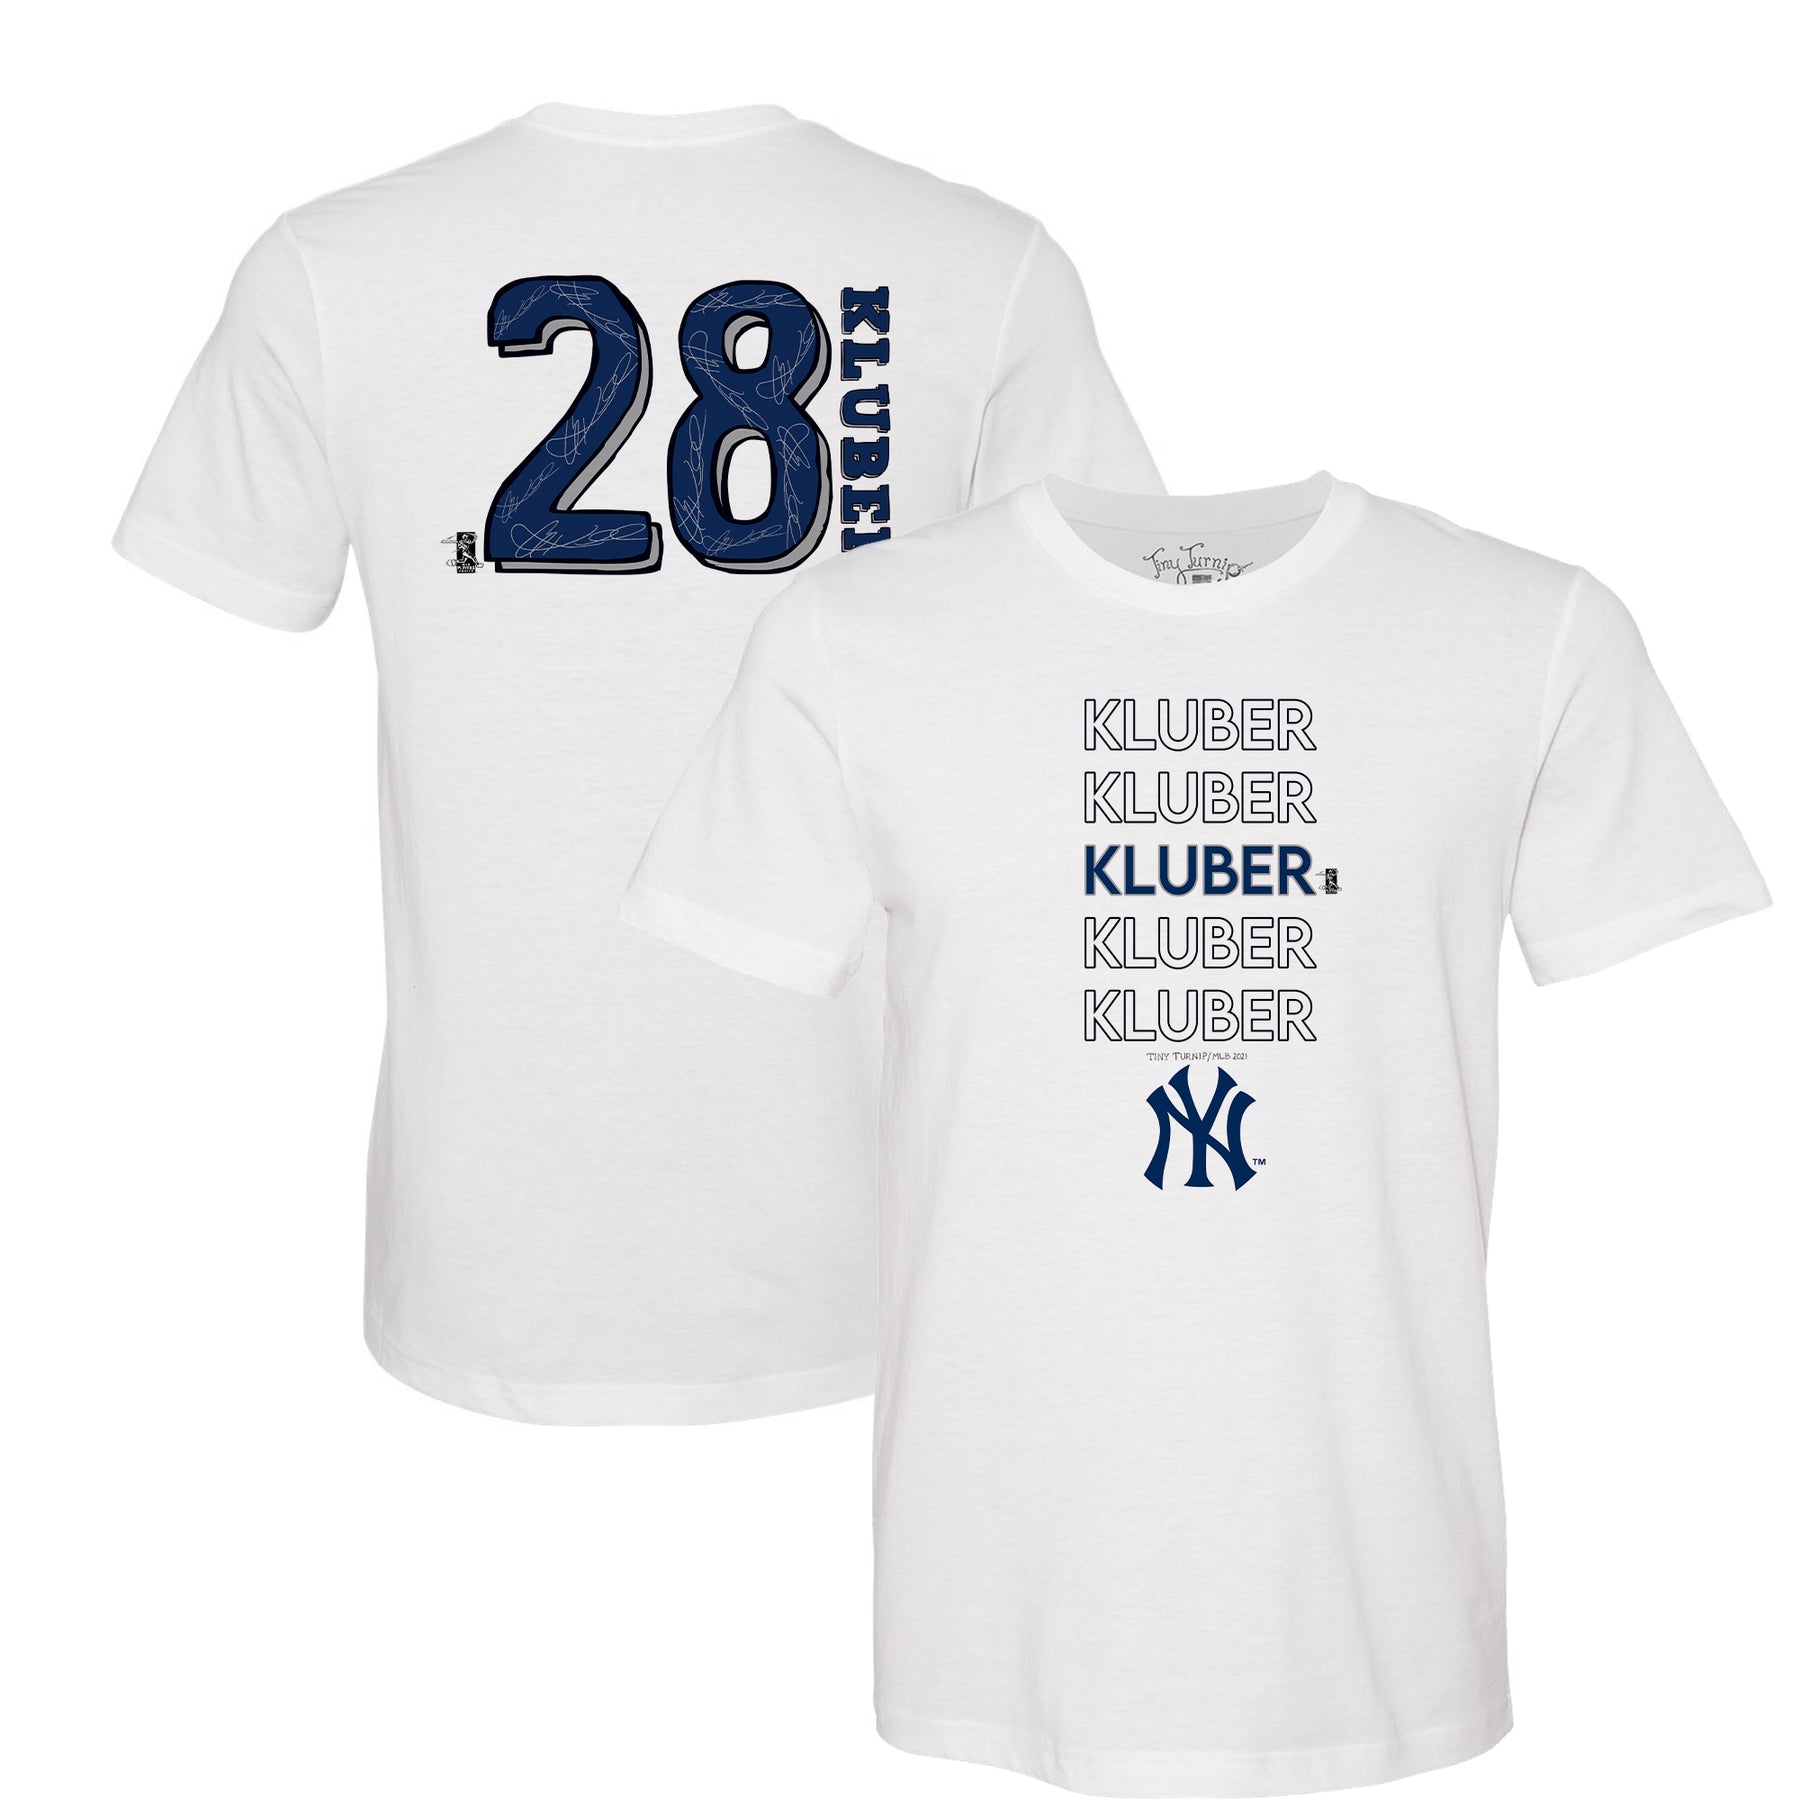 Youth Tiny Turnip White New York Yankees Triple Scoop T-Shirt Size: Medium